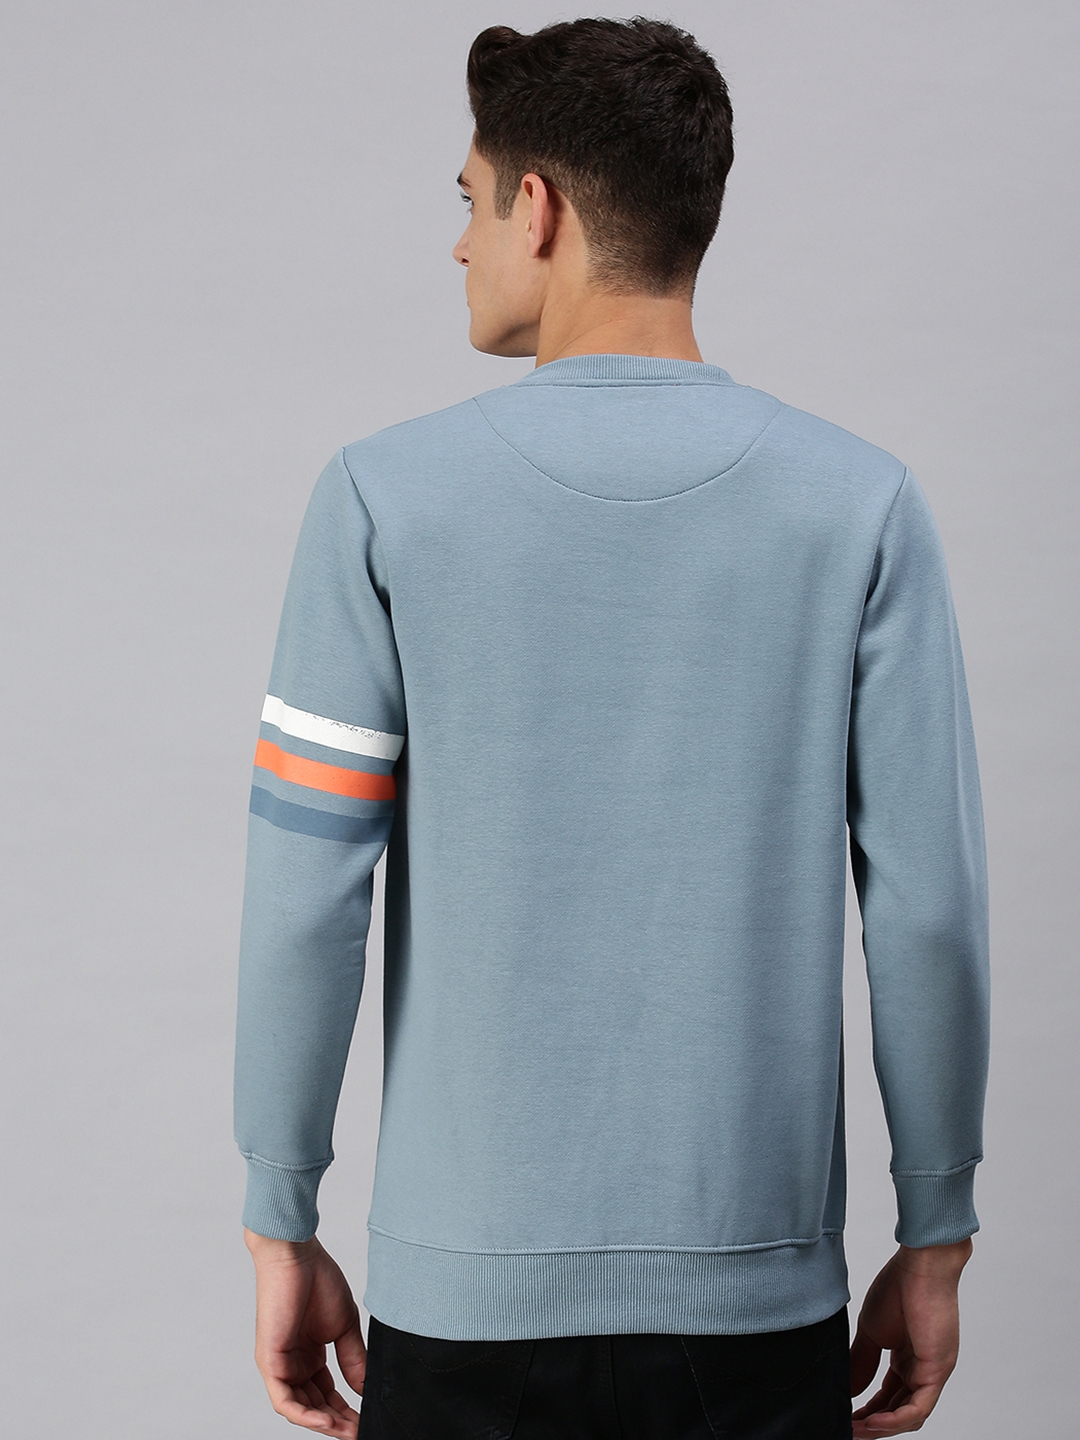 Men's Blue Cotton Printed Sweatshirts